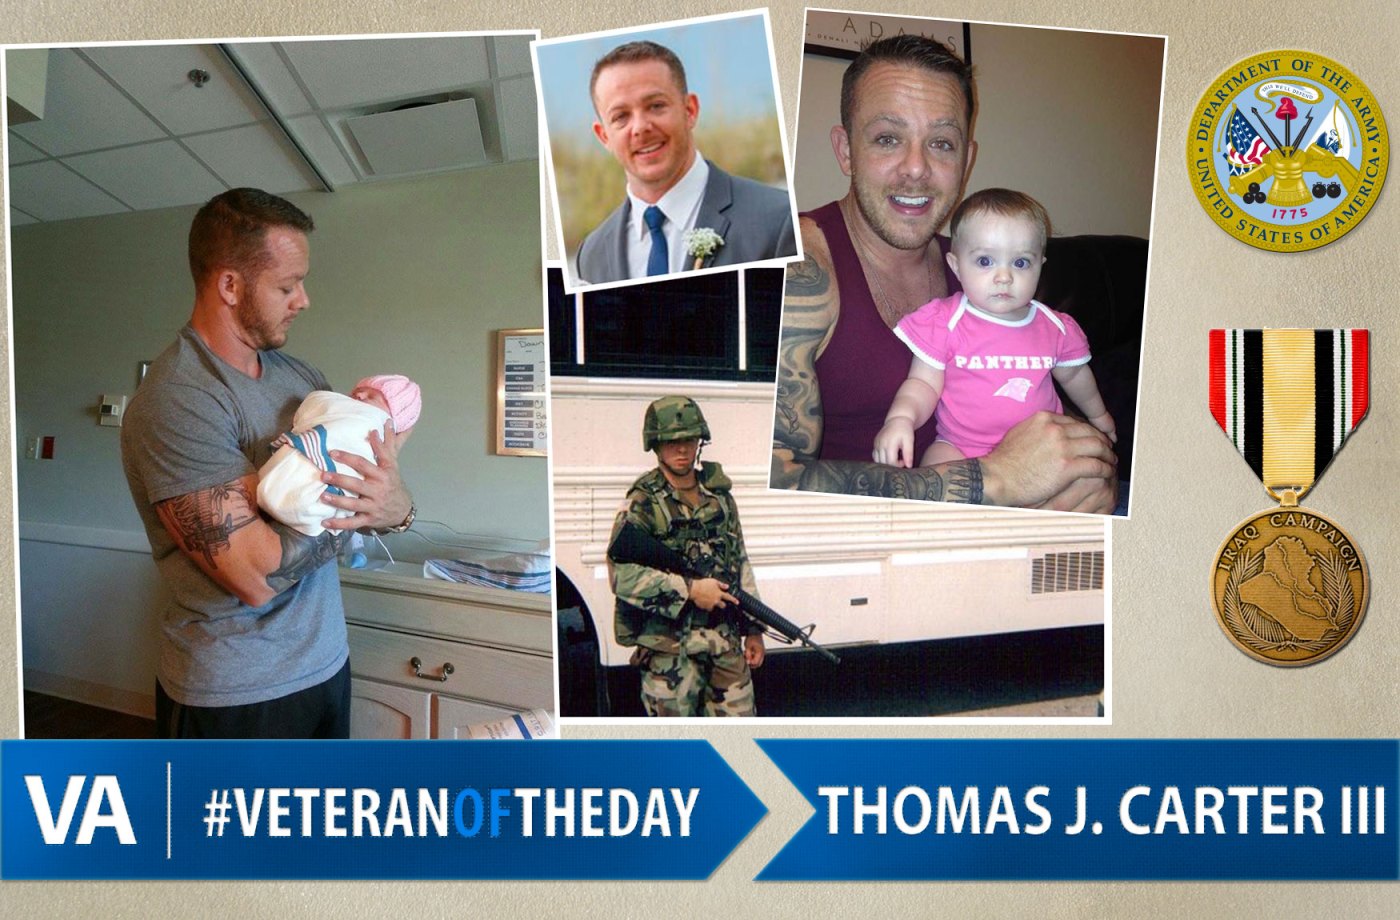 Thomas J. Carter III - Veteran of the Day